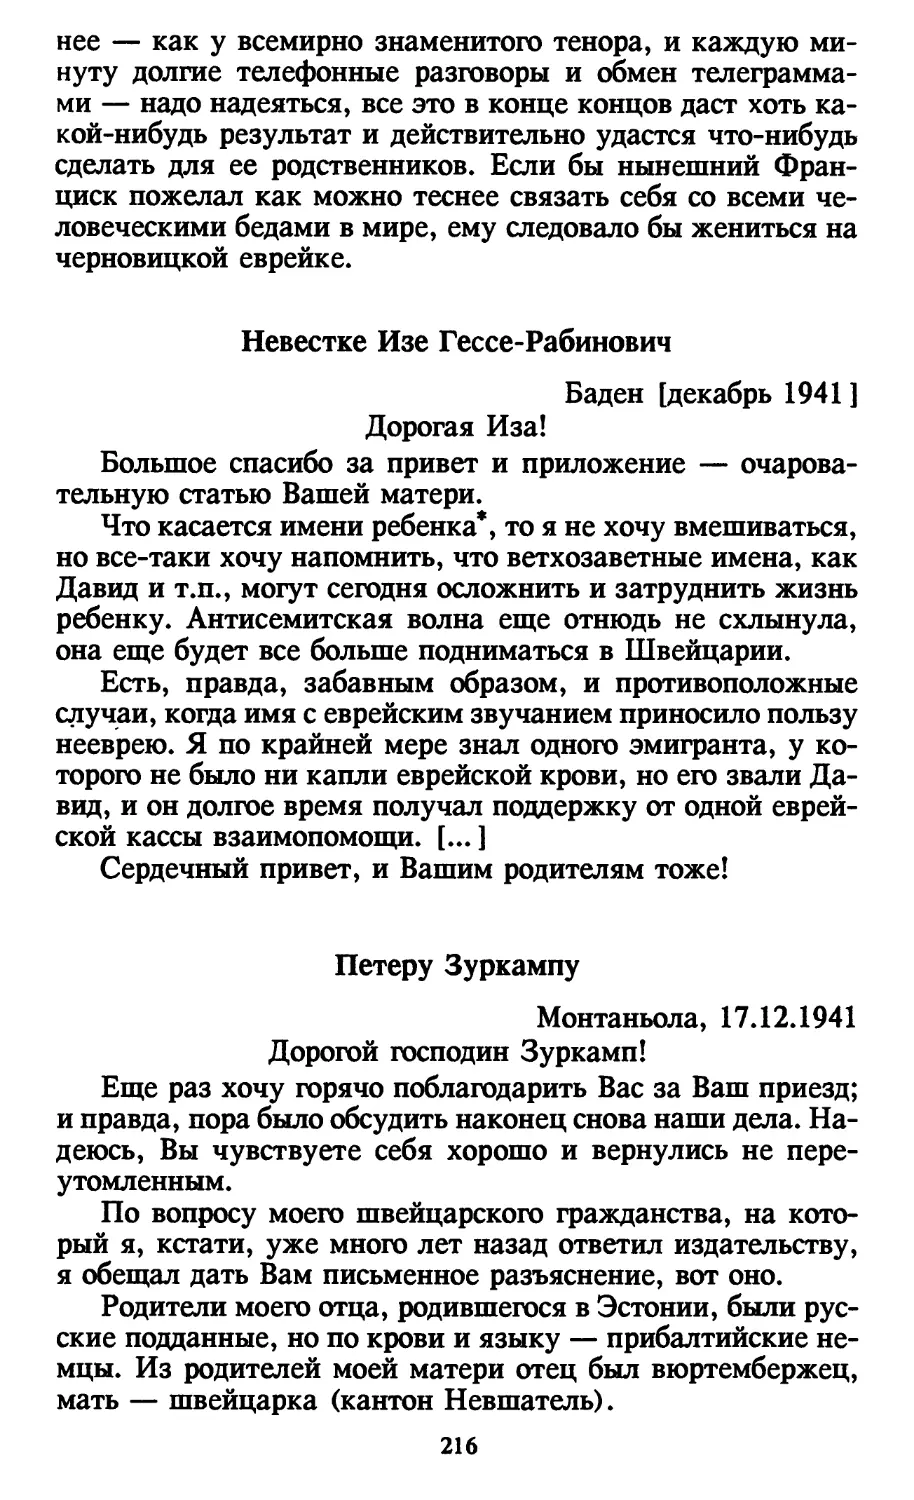 Цевестке Изе Гессе-Рабинович [декабрь 1941]
Петеру Зуркампу. 17.12.1941